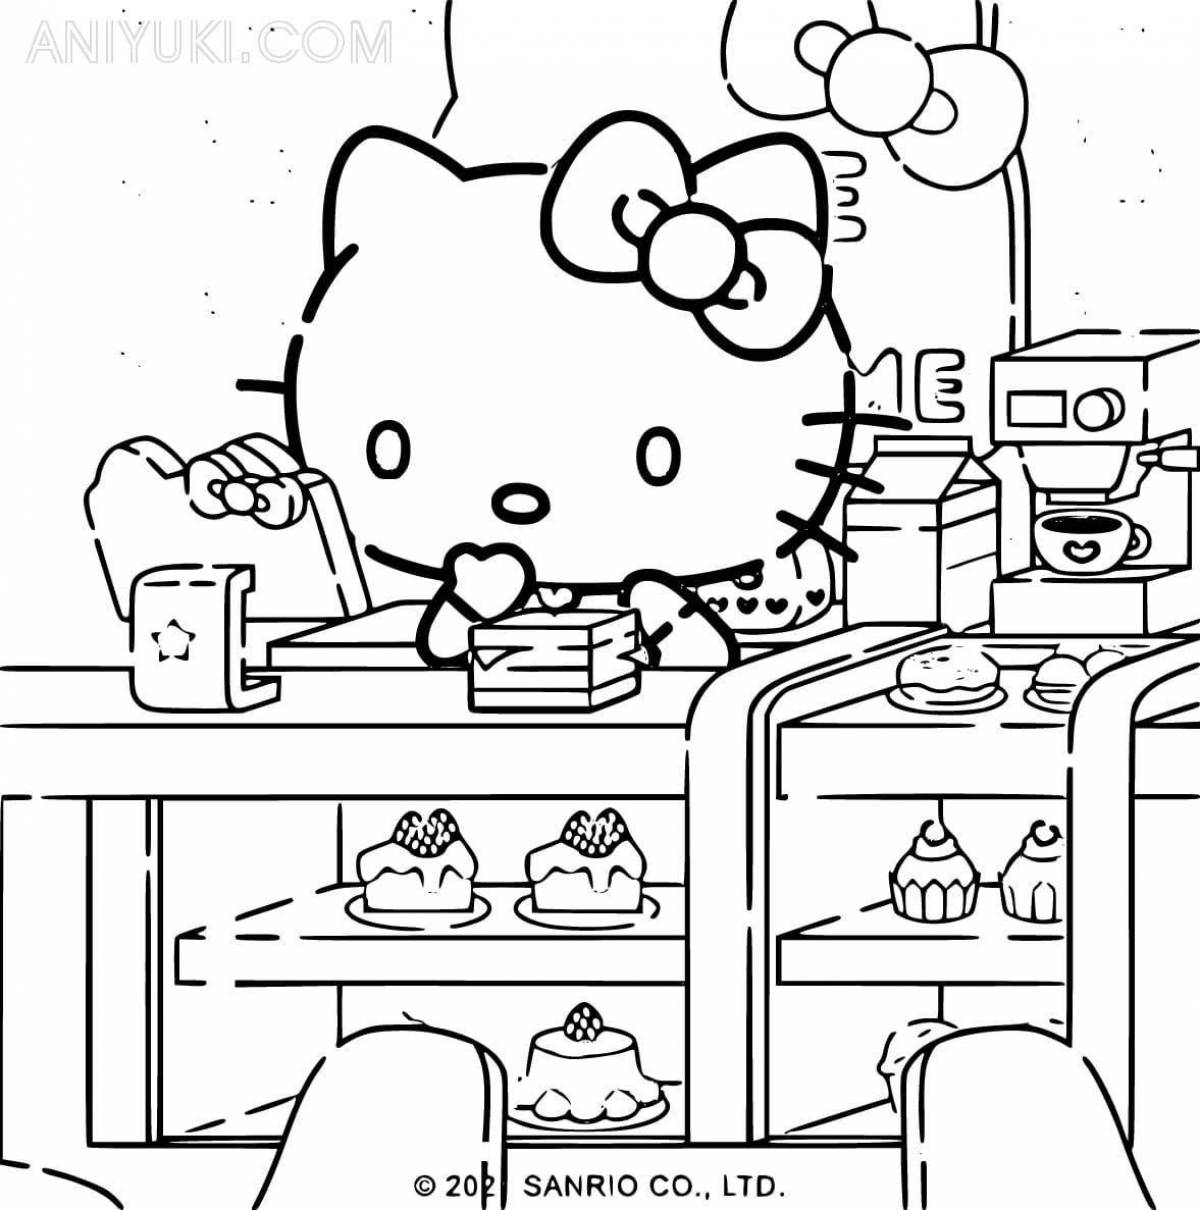 Zany astro kitty coloring book